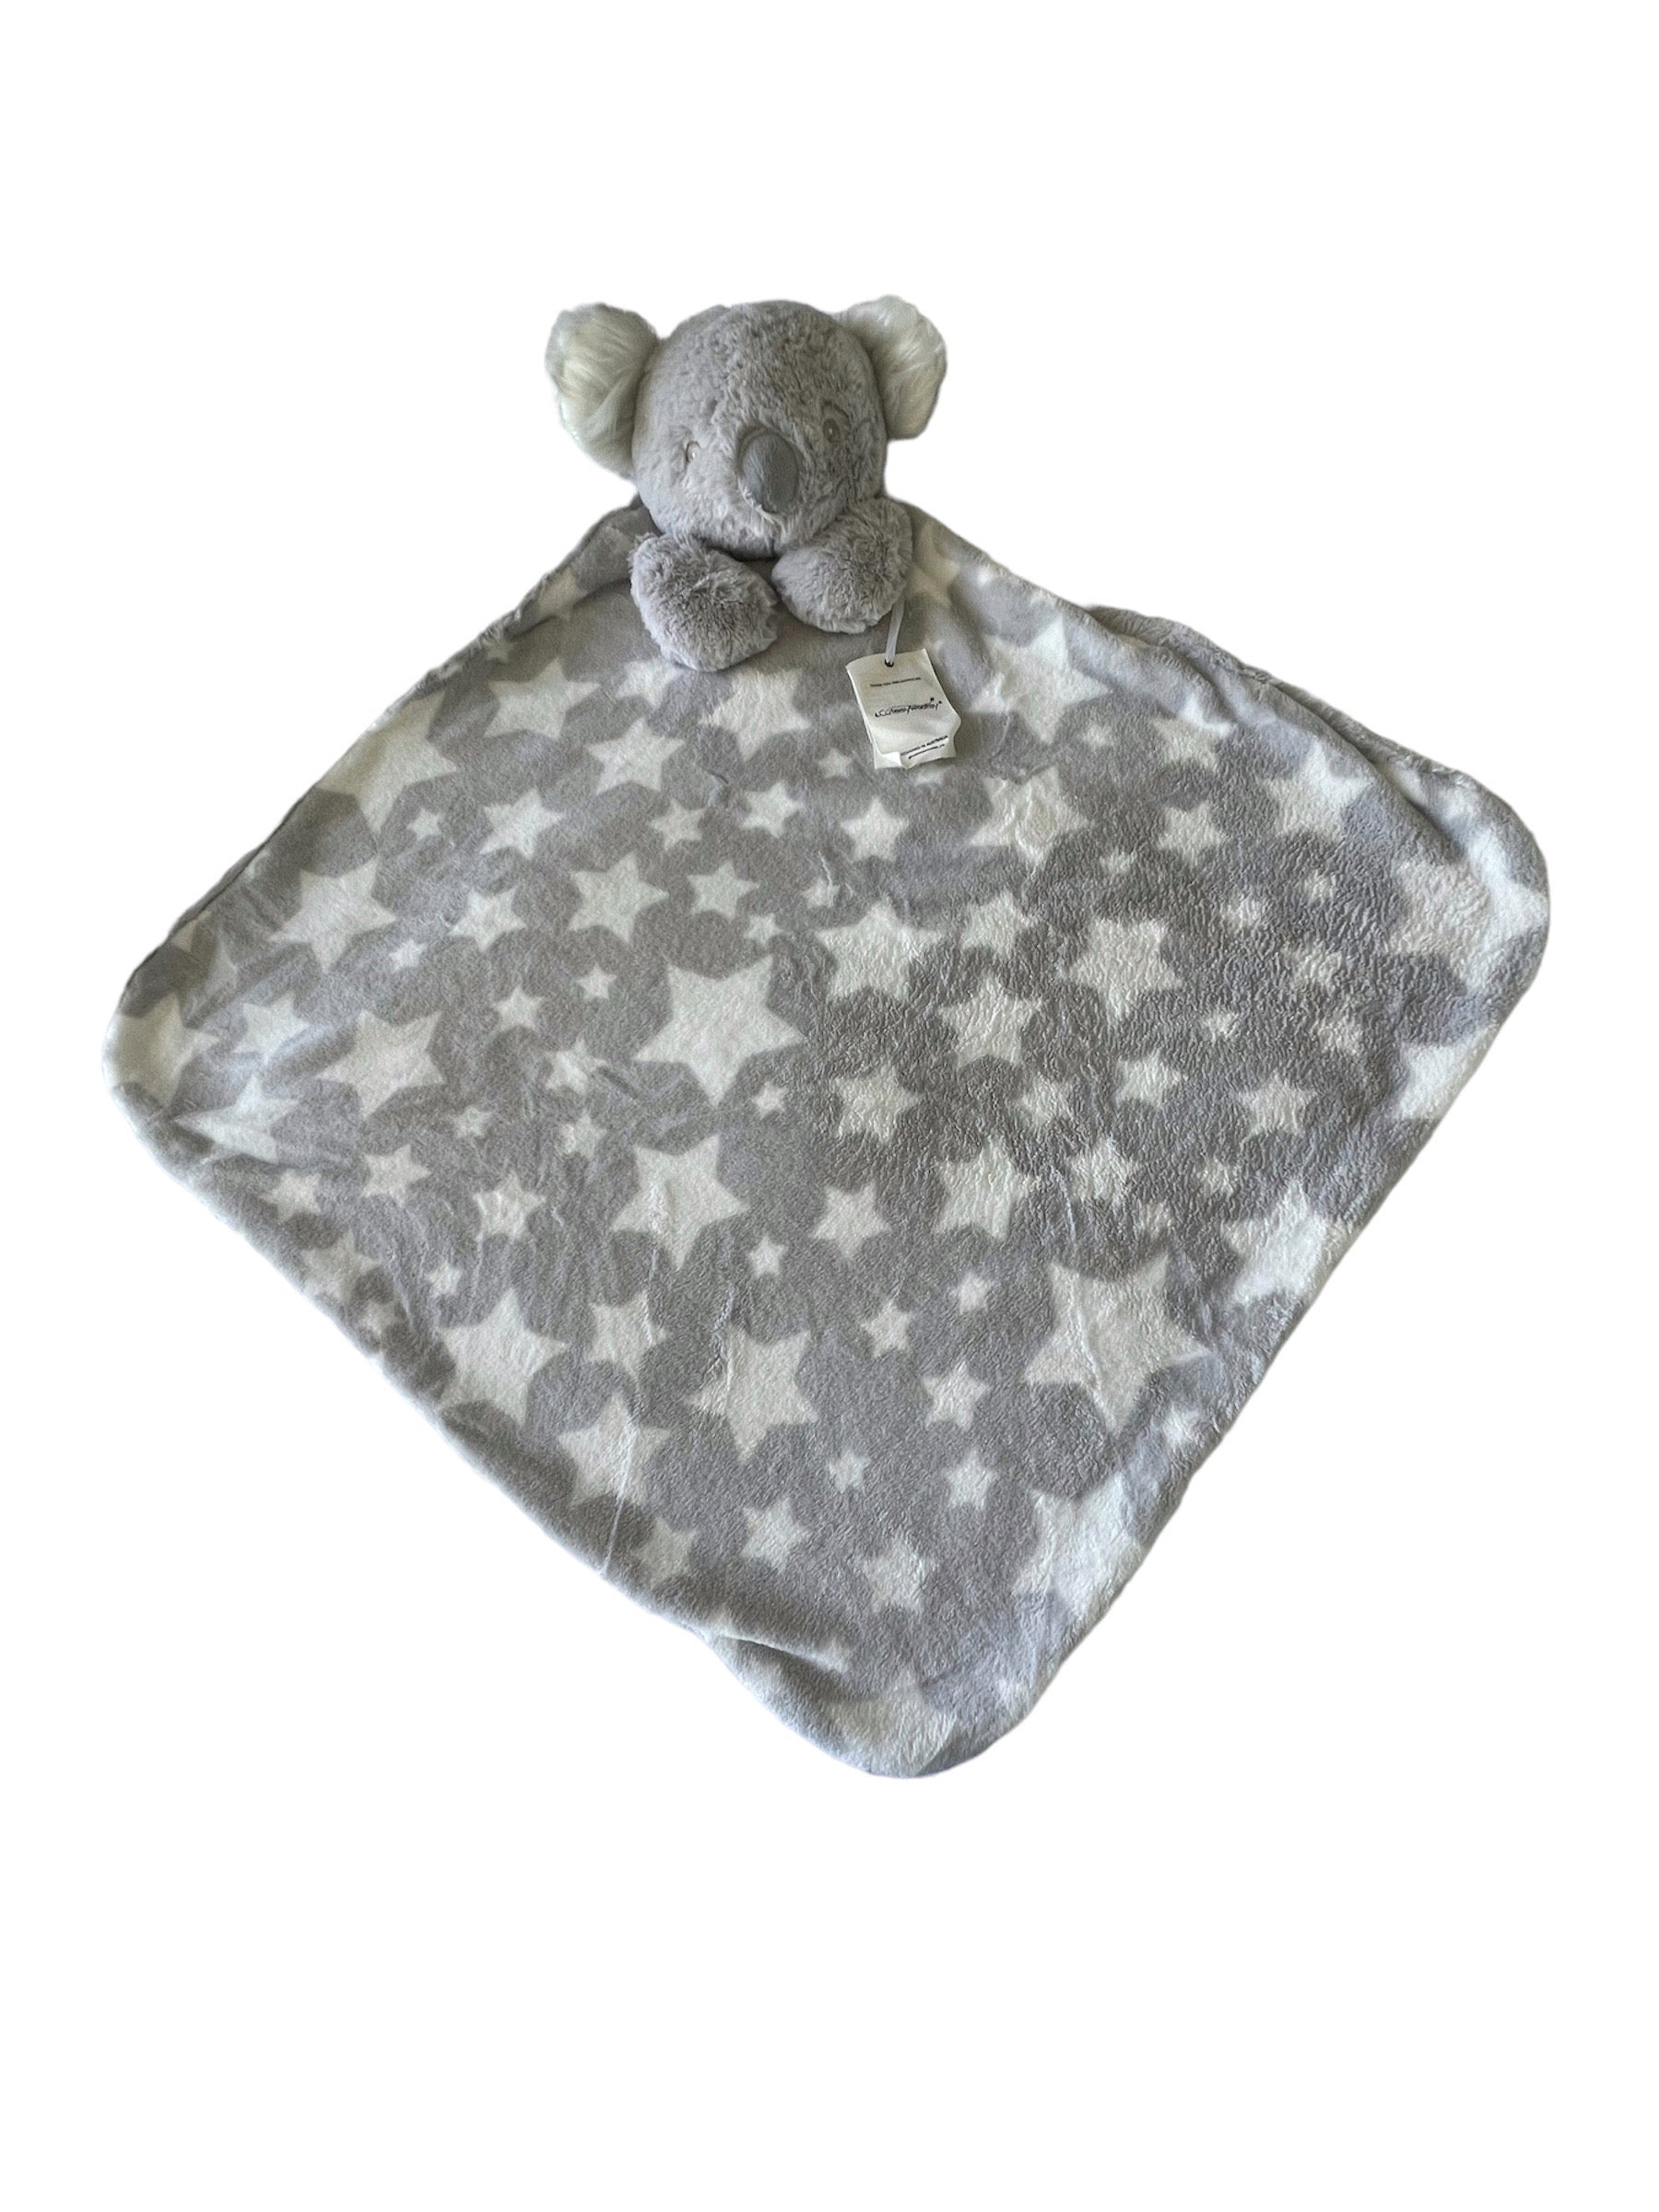 Starry Coral Koala Dreams: Butternut-Silver Grey Snuggly Koala Jumbo Comforter Blanket with Snow White Stars